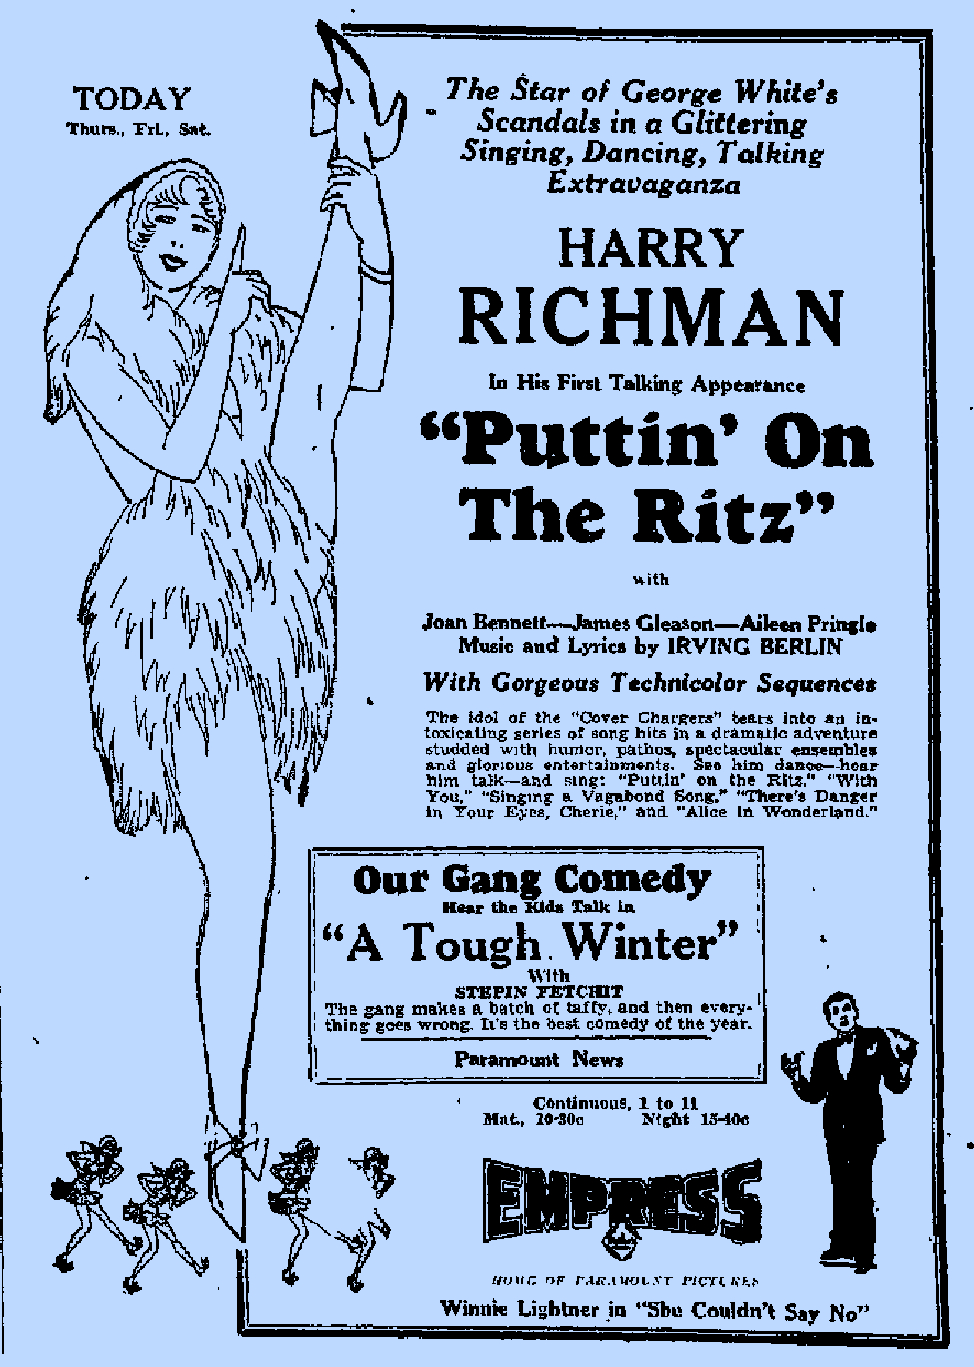 [Ritz+-+Tough+Winter+-+1930.jpg]